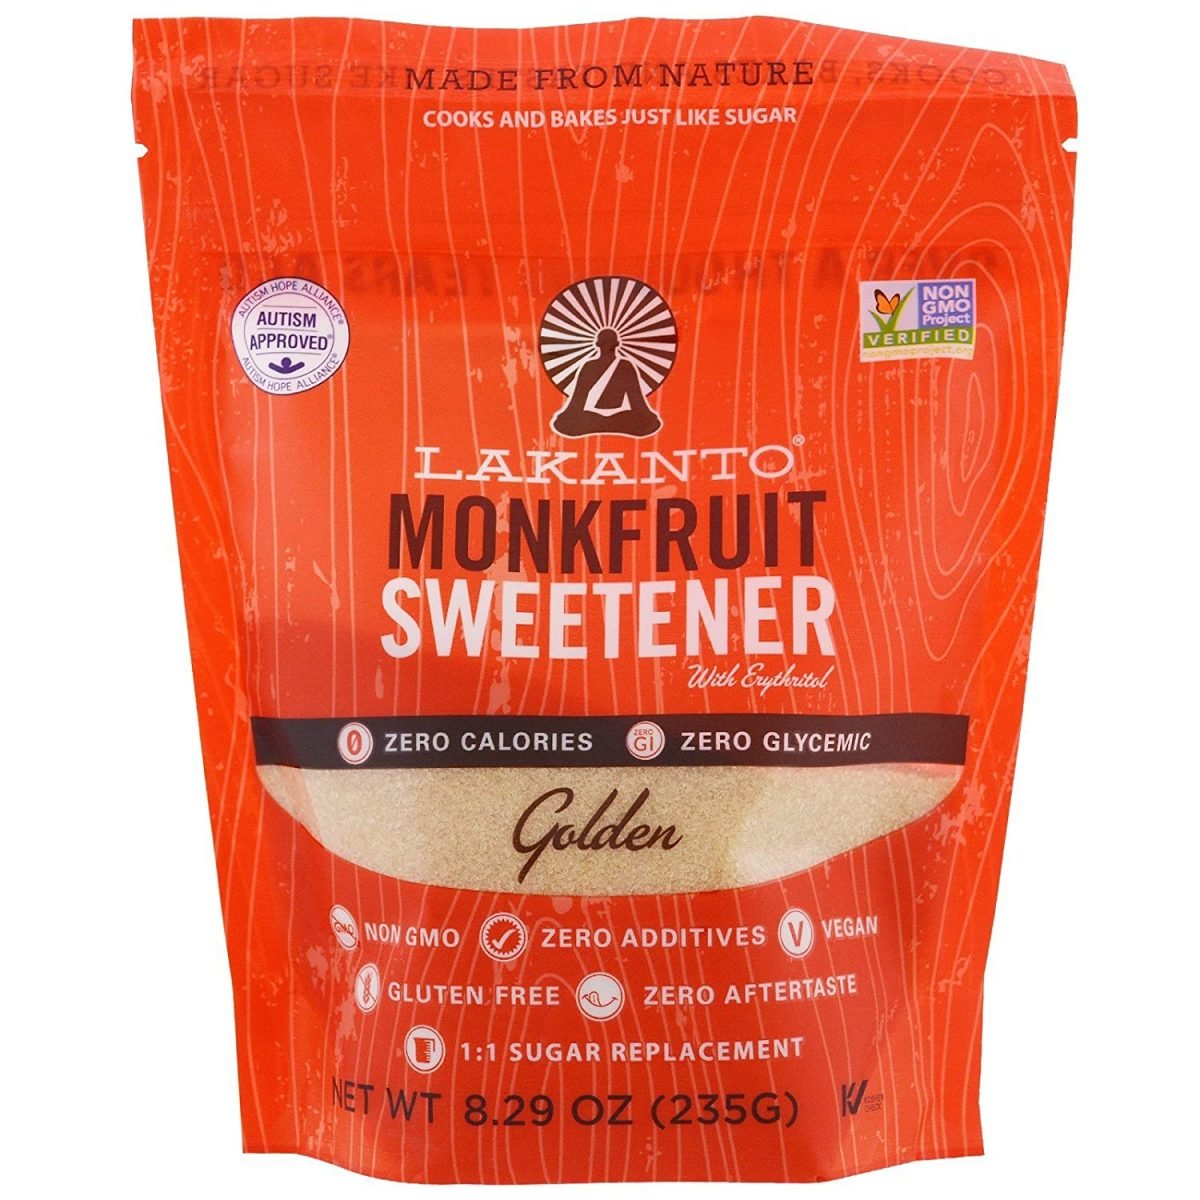 Lakanto Monkfruit Sweetener: Save 20% on non sale items with promo code: pound20